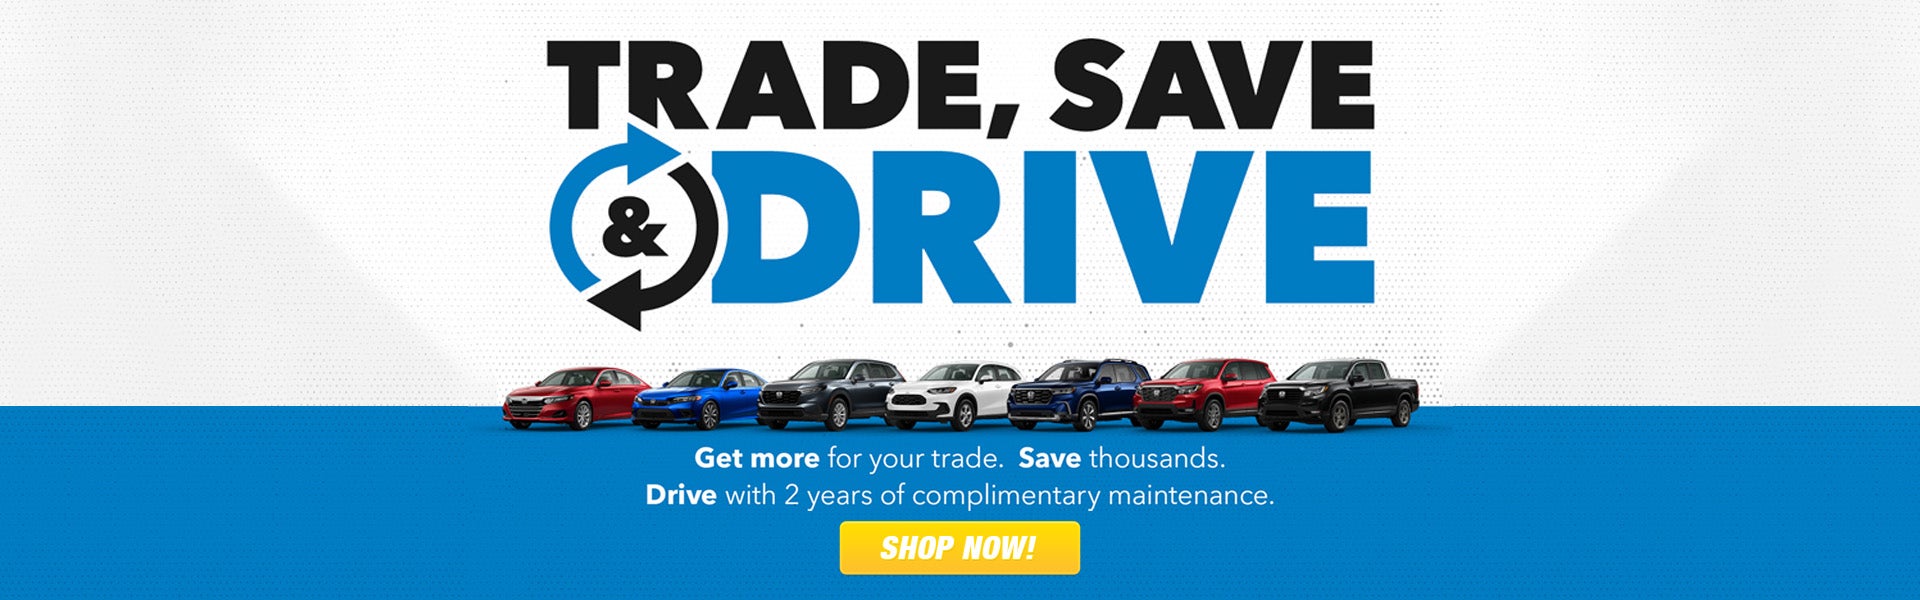 Trade, Save & Drive